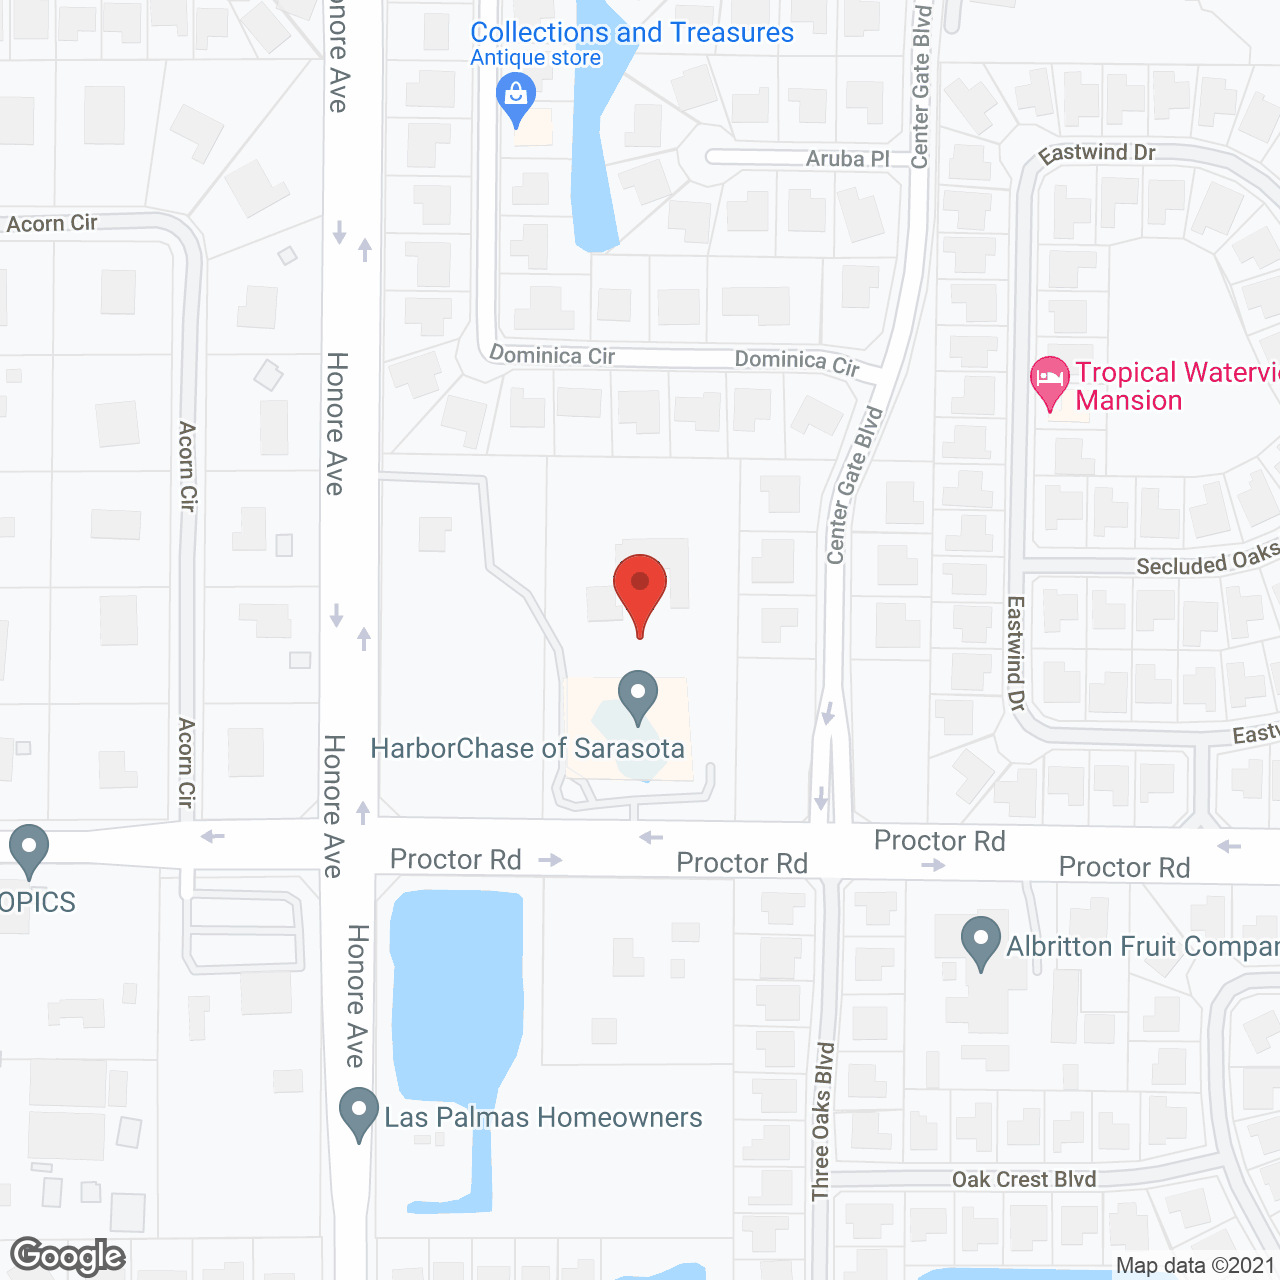 HarborChase of Sarasota in google map